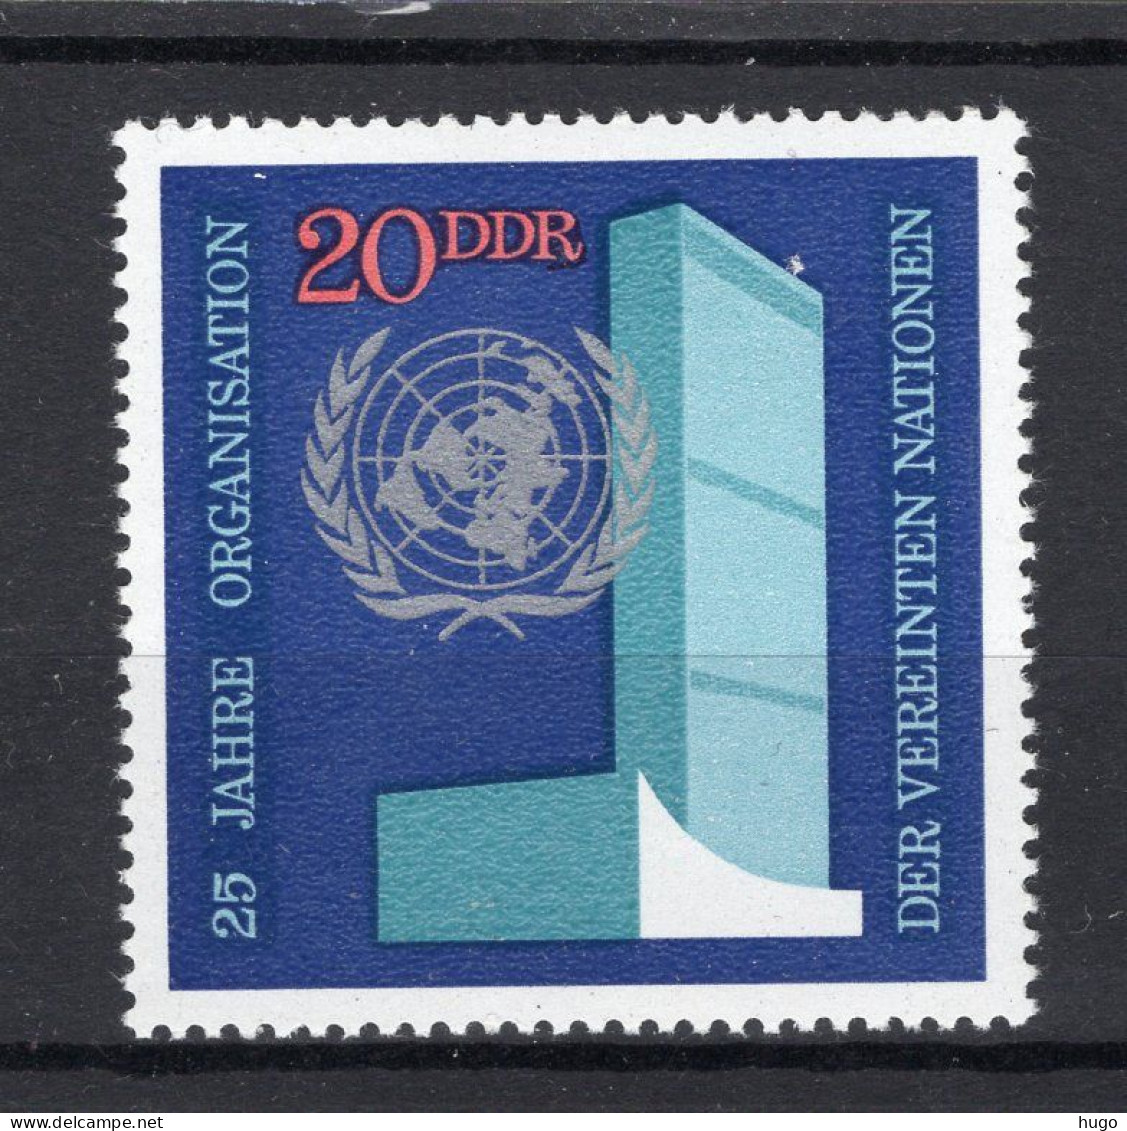 DDR Yt. 1312 MNH 1970 - Unused Stamps